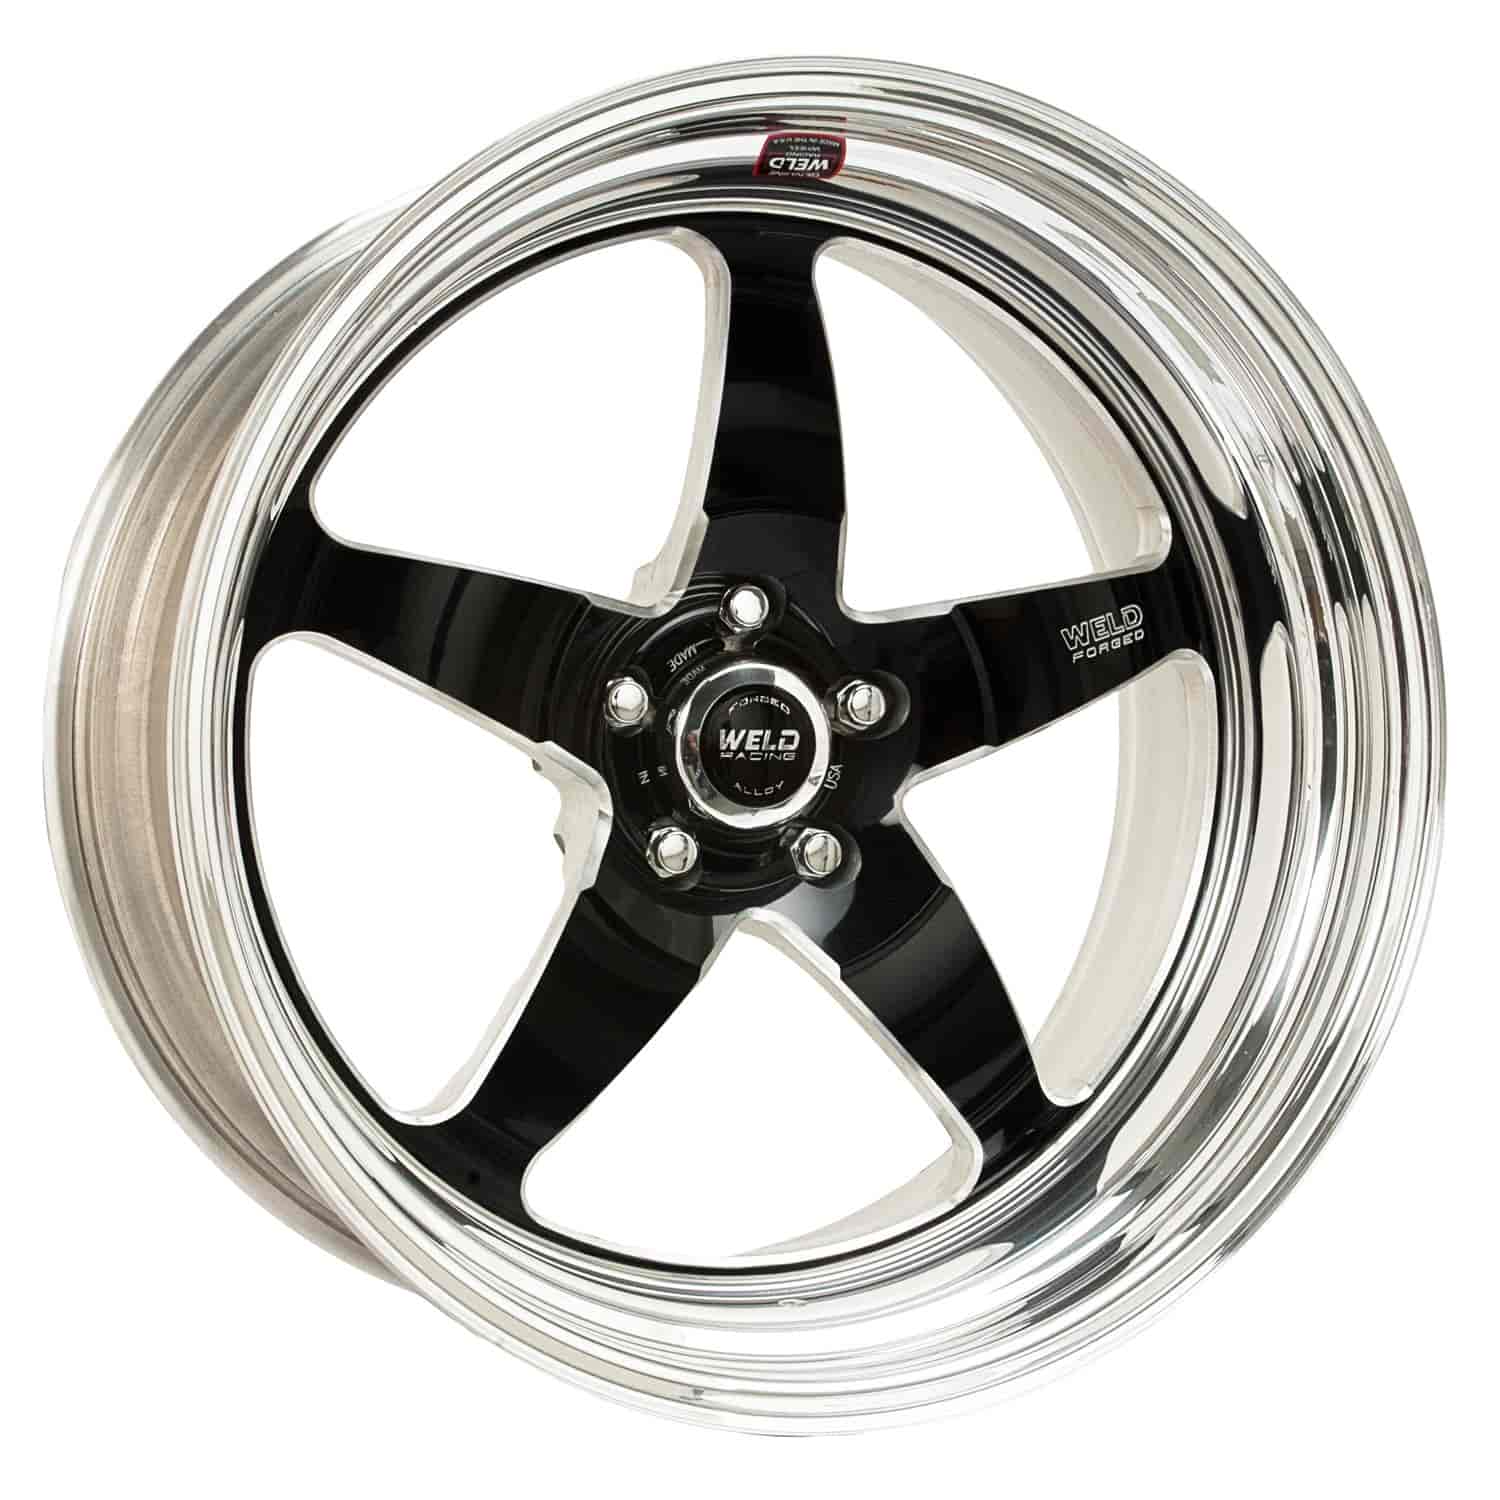 RT-S Series Wheel Size: 17" x 8" Bolt Circle: 5 x 4.5"